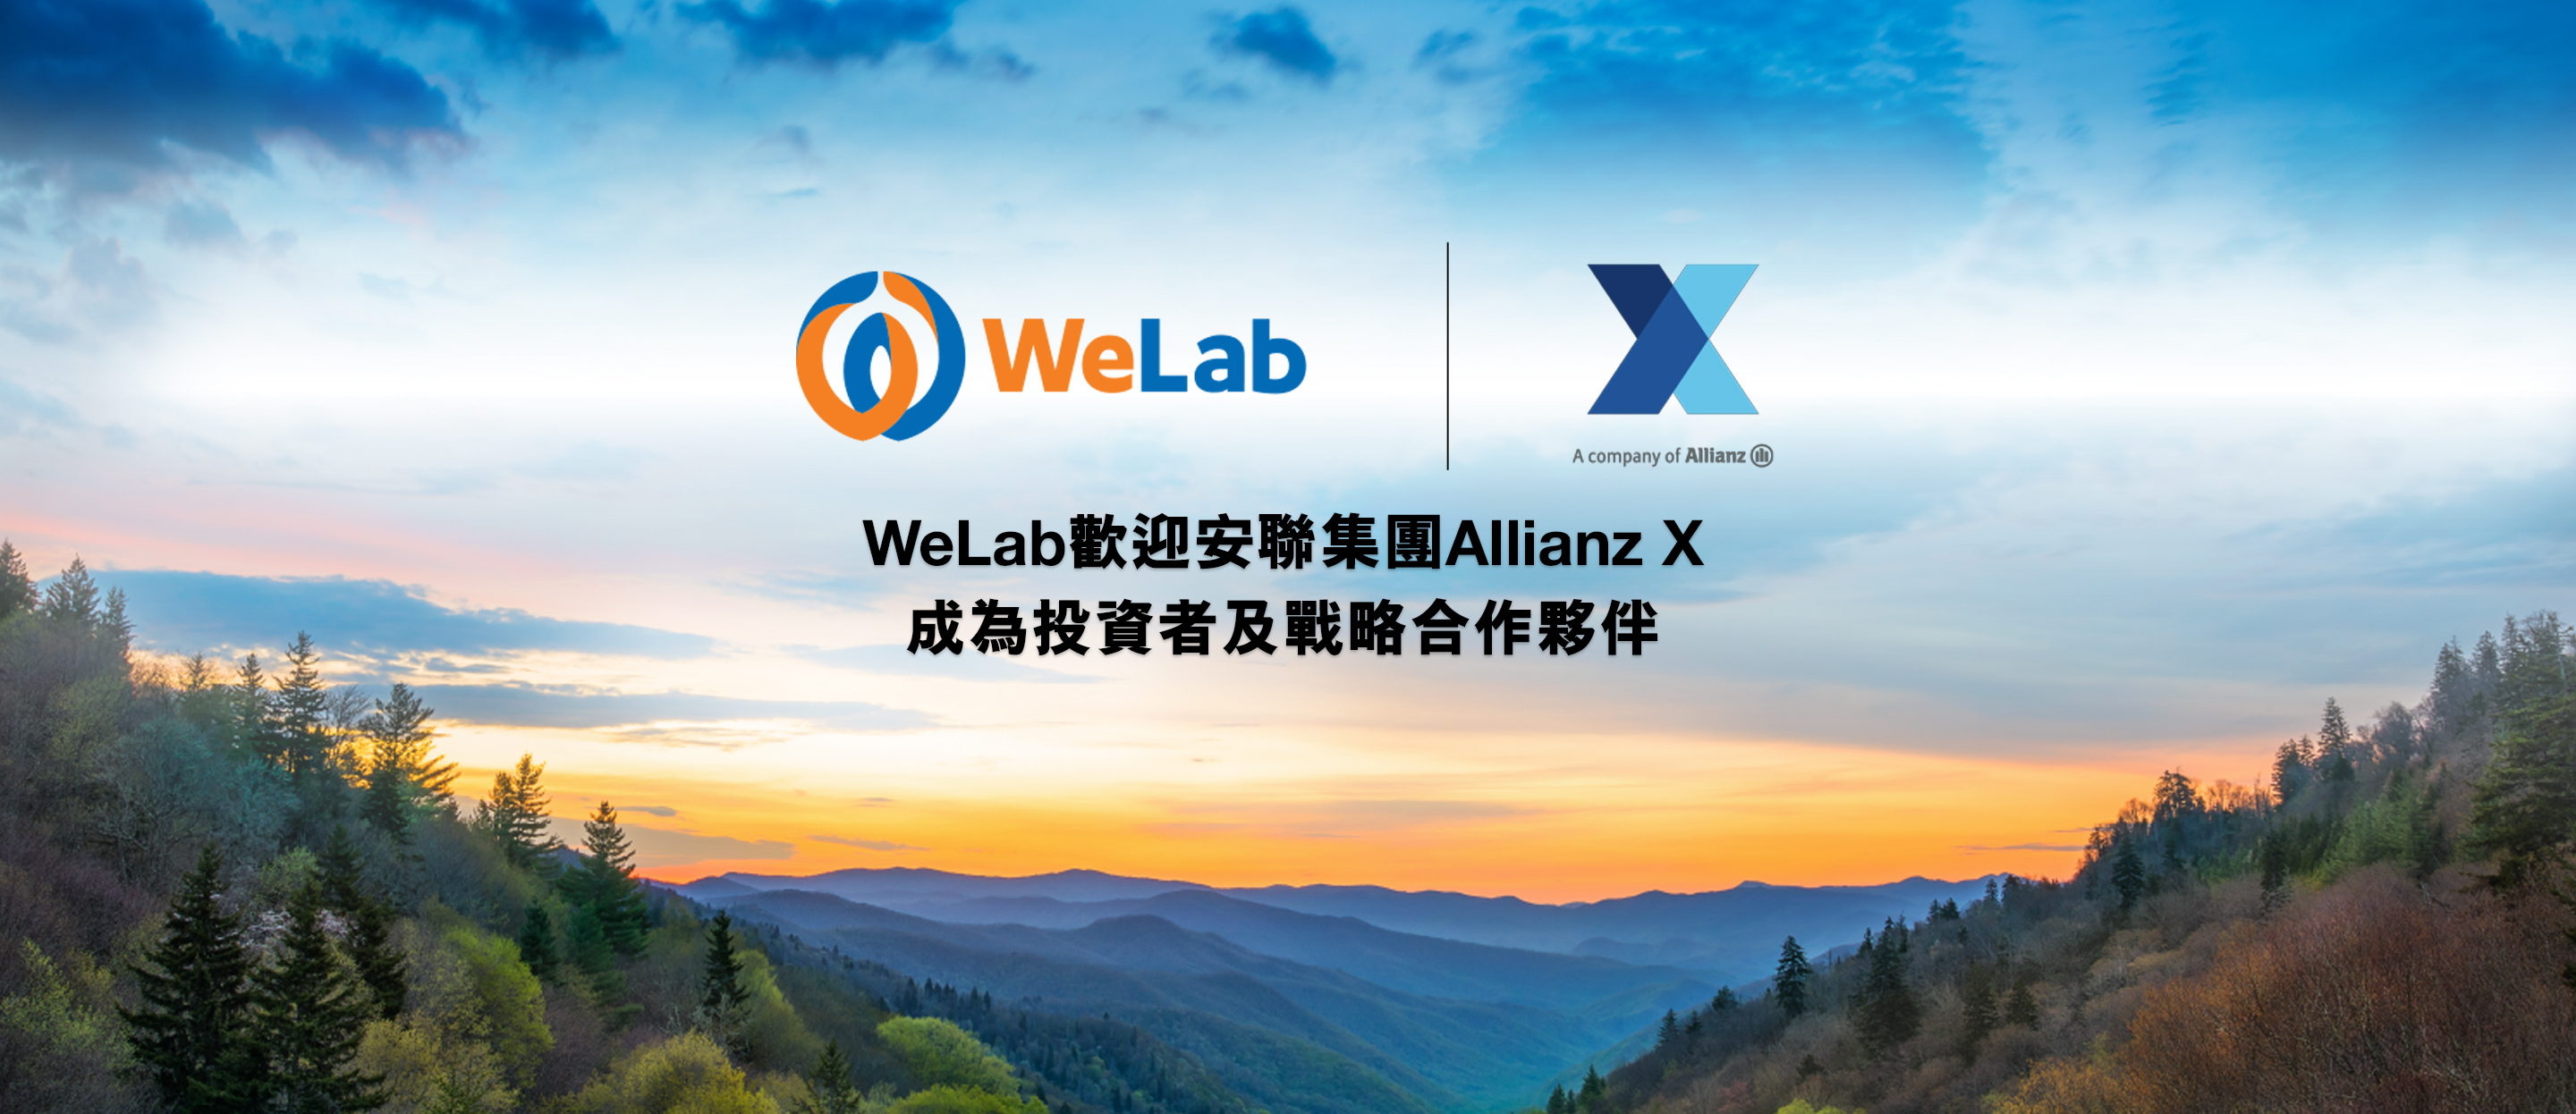 WeLab初步完成C-1輪融資，獲安聯集團Allianz X領投7500萬美元